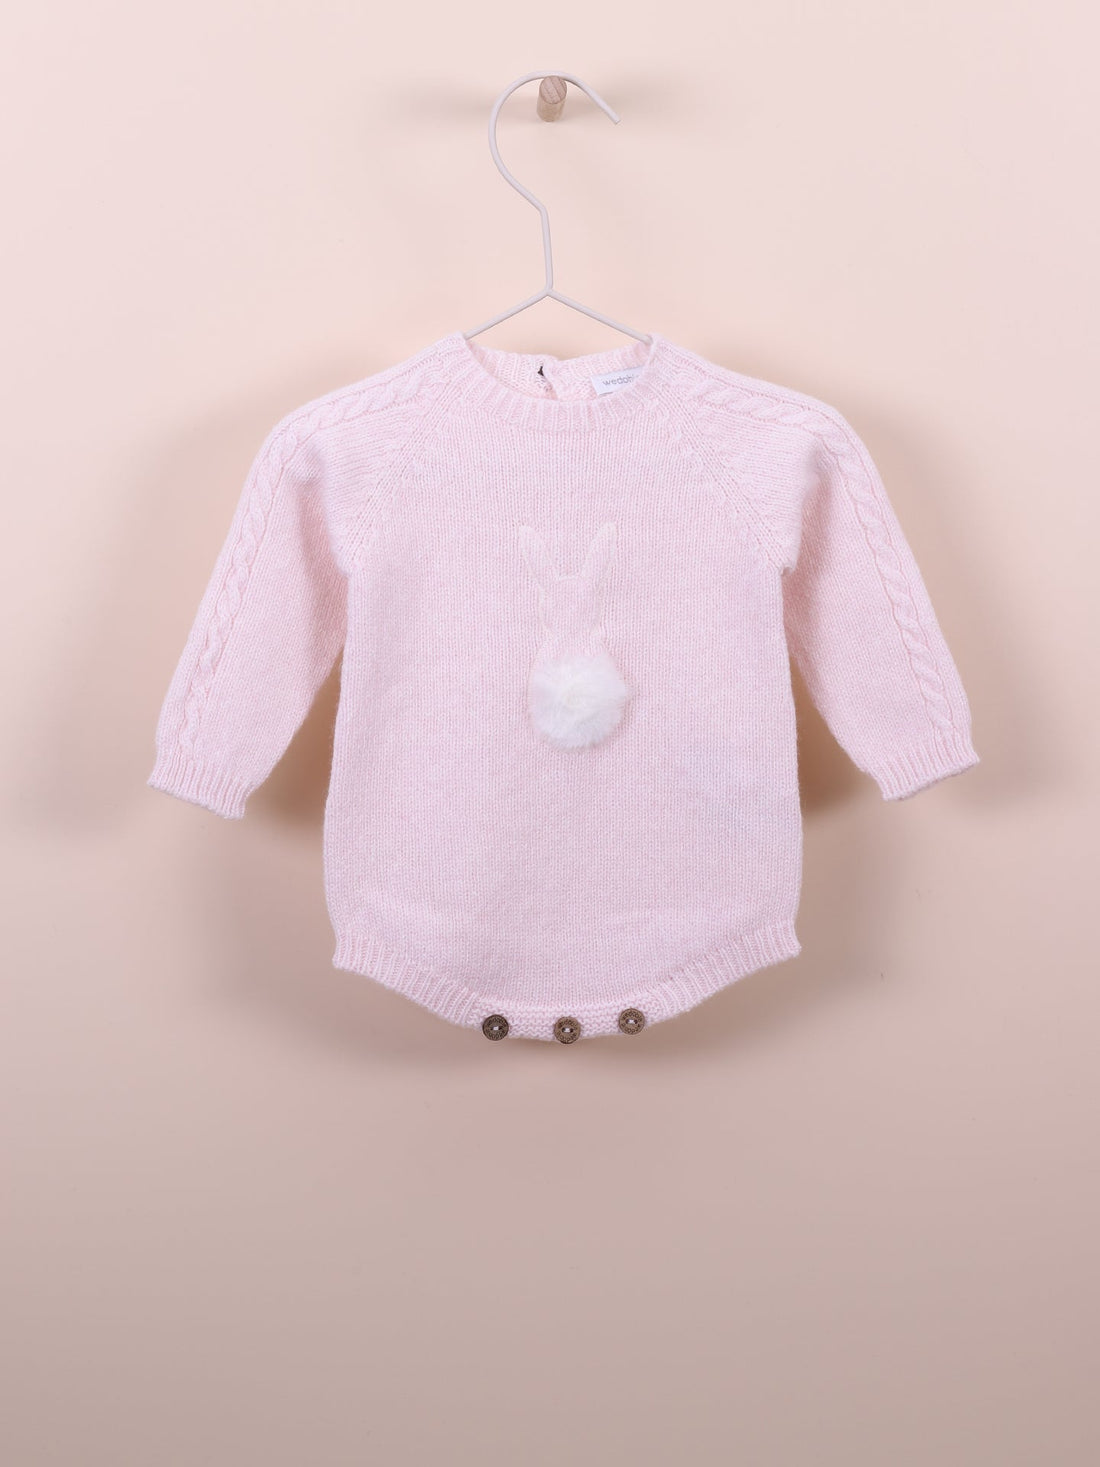 Cottontail Cashmere Knit Romper- Ballet Pink